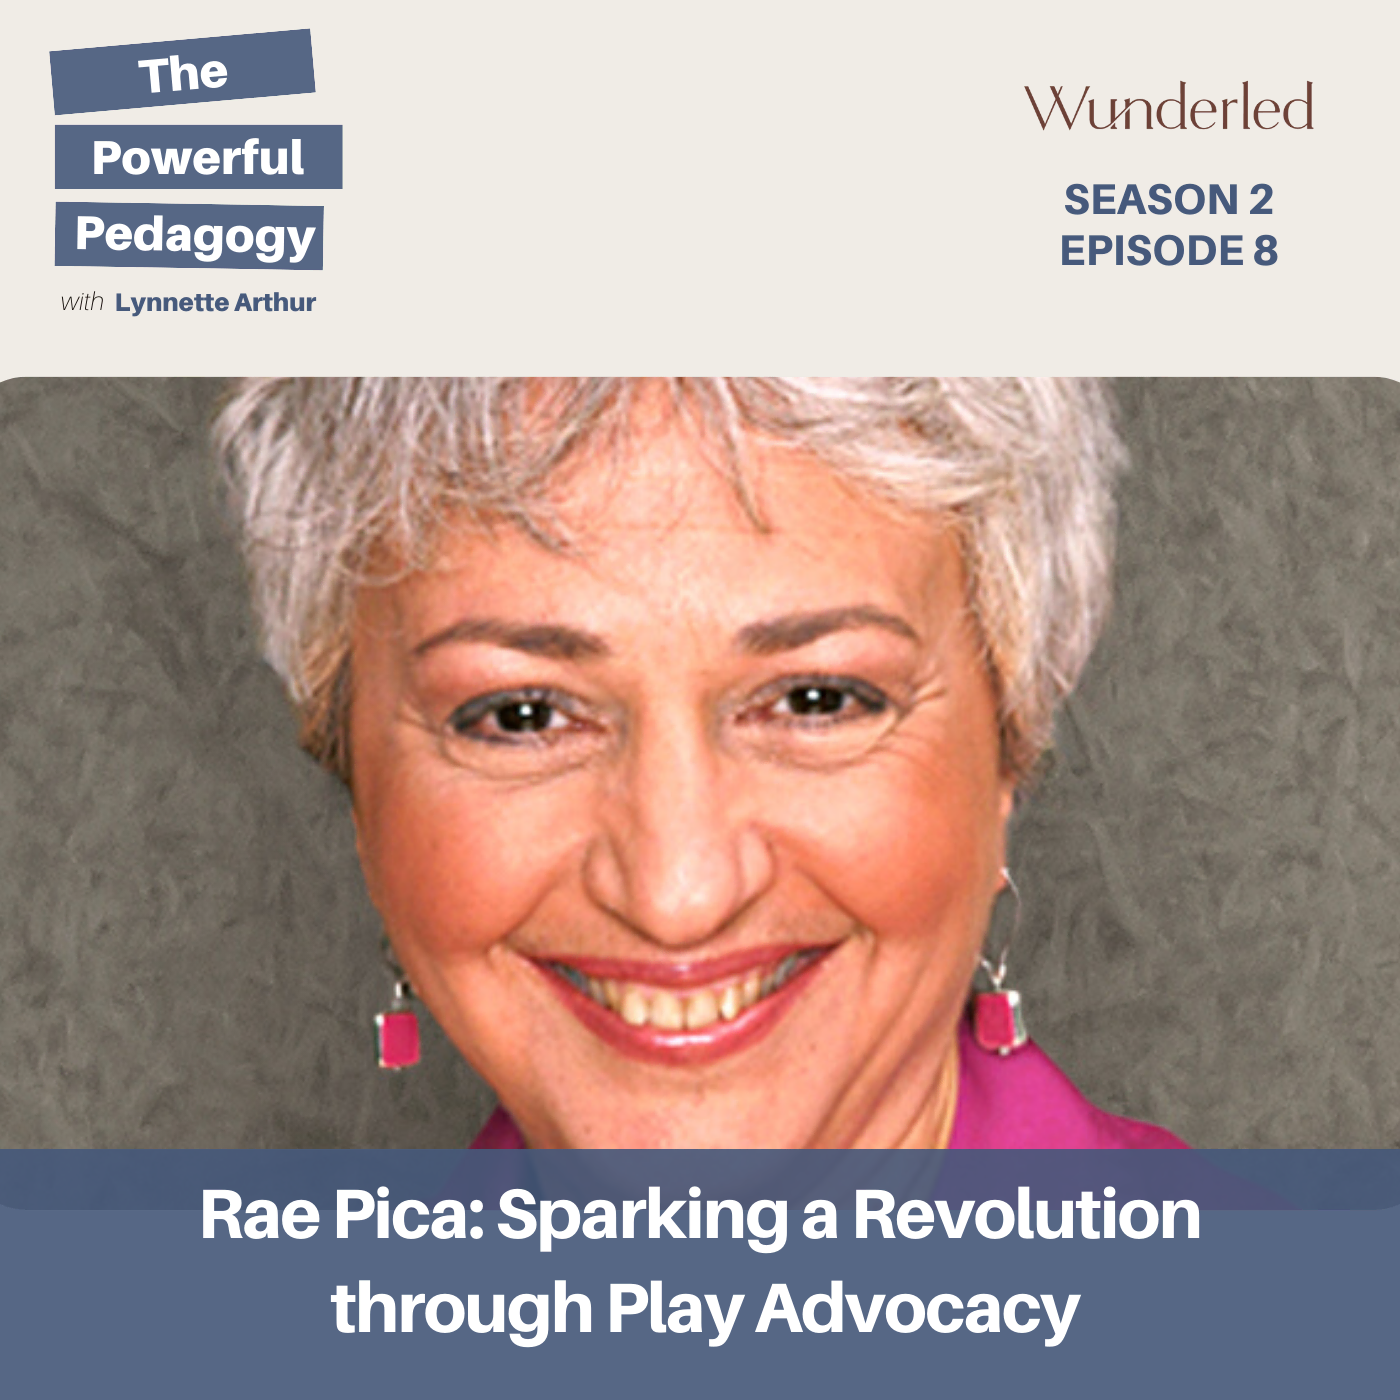 Rae Pica: Sparking a Revolution through Play Advocacy